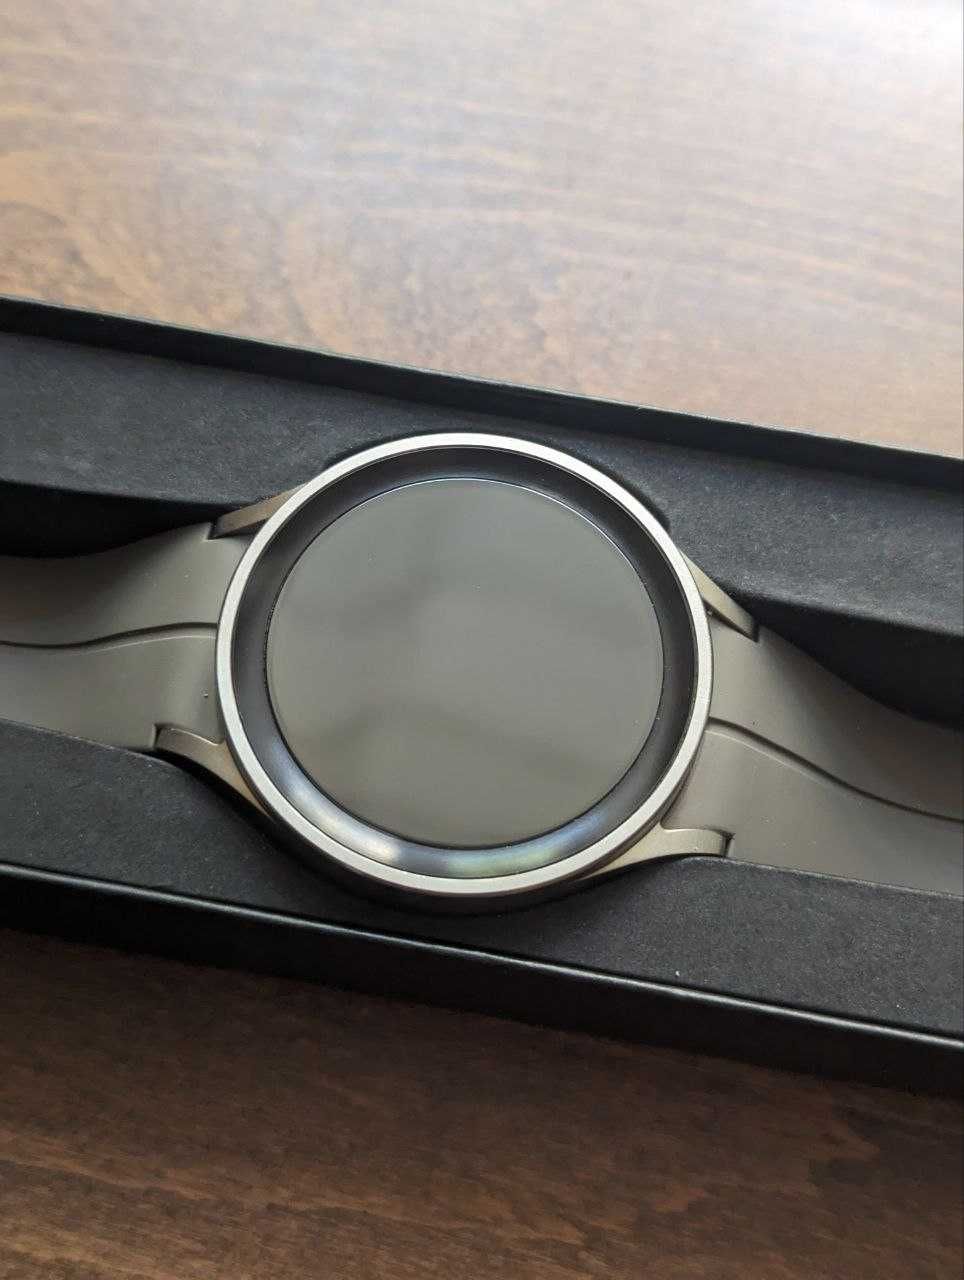 Samsung Galaxy Watch 5 Pro 45mm LTE SM-R925F Titanium